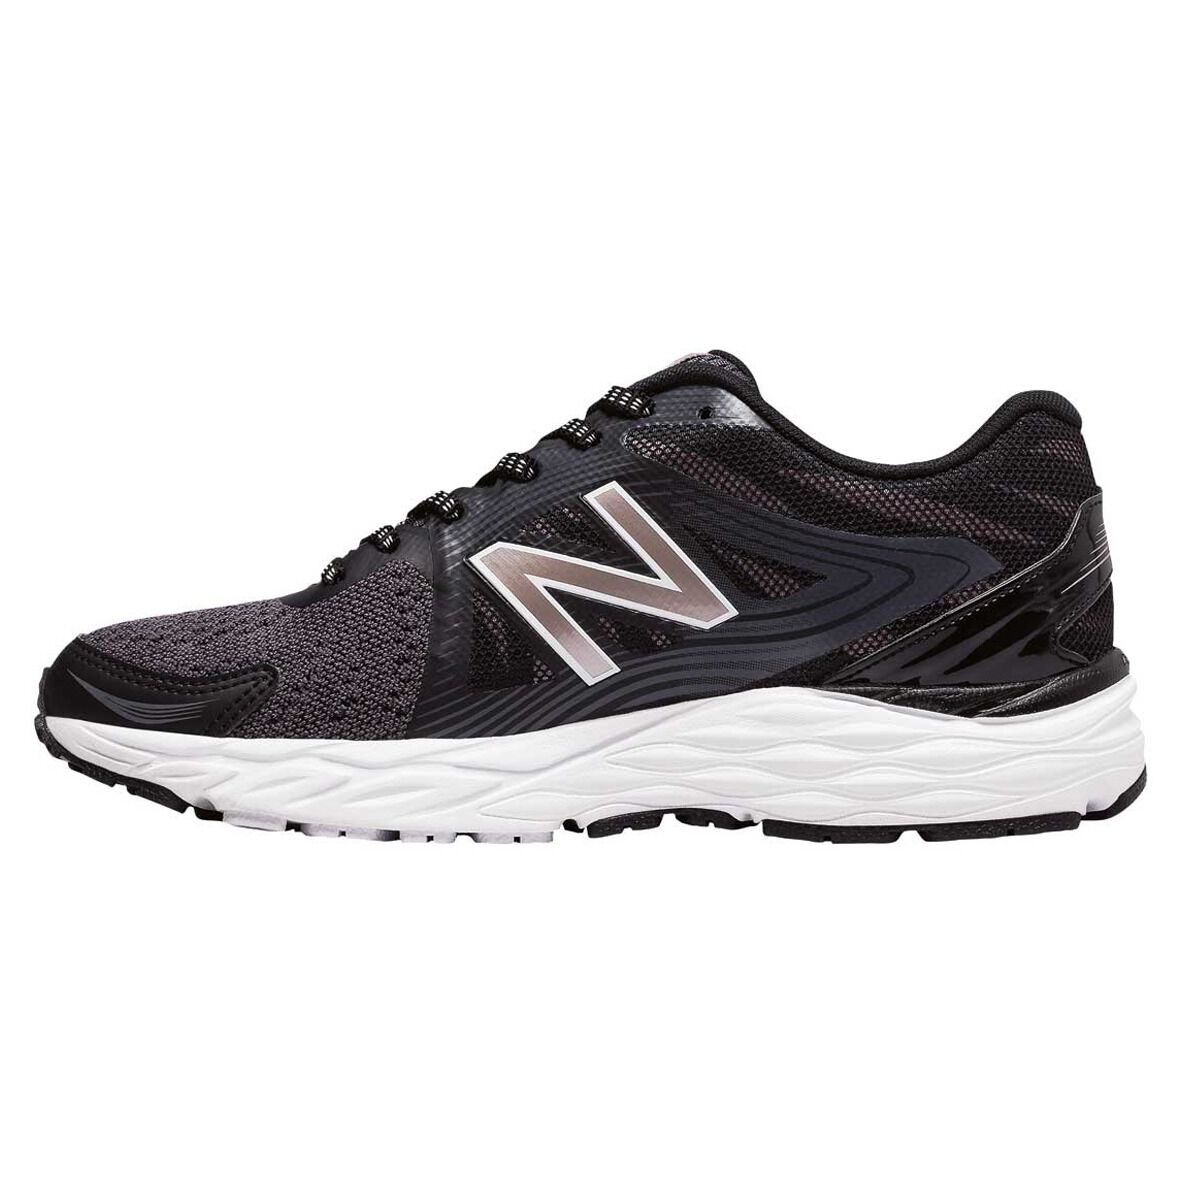 New Balance 680 v4 Womens Running Shoes 